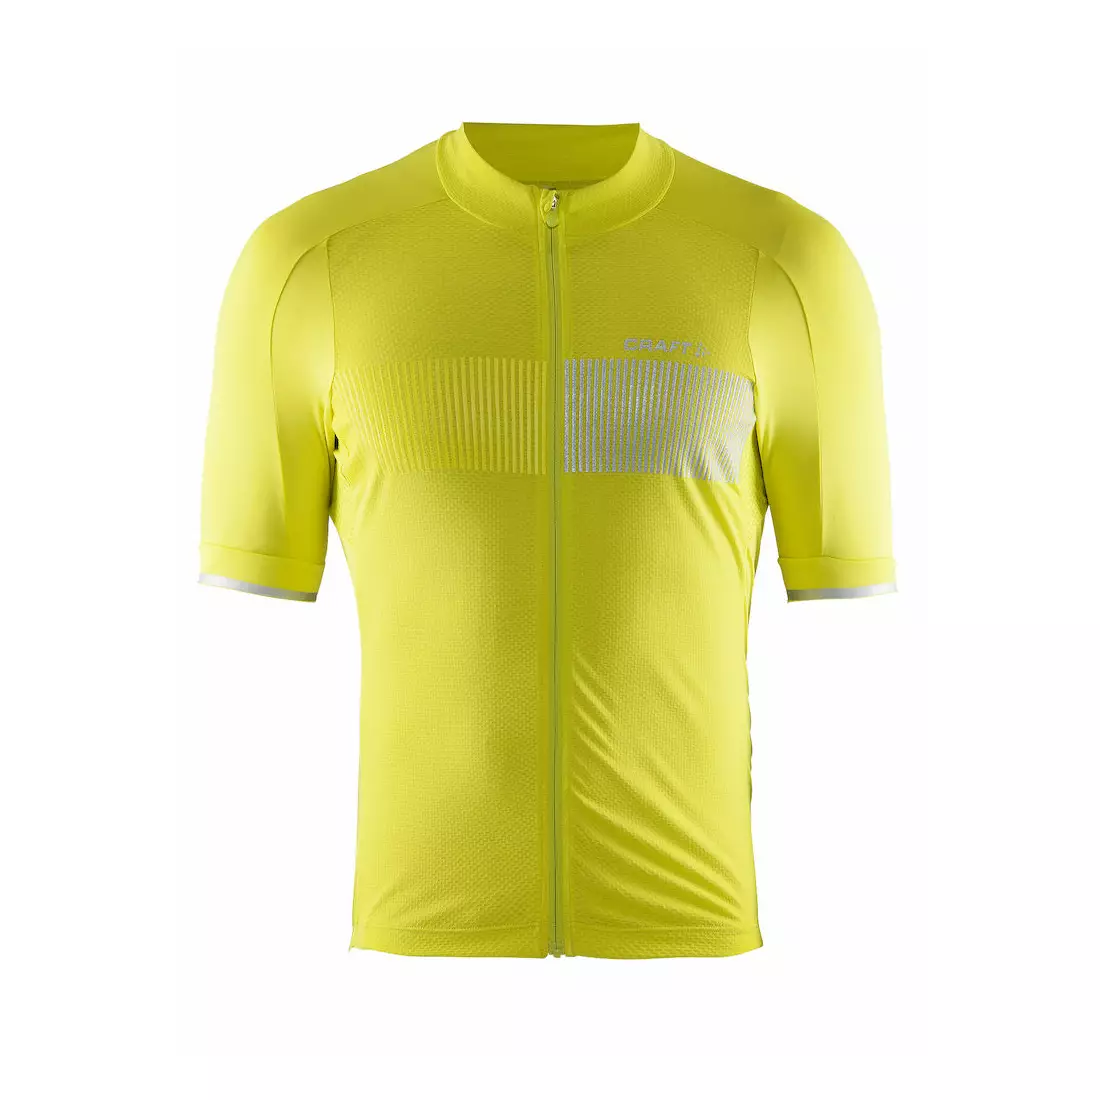 CRAFT Verve Glow 1904995-2605 - men's cycling jersey